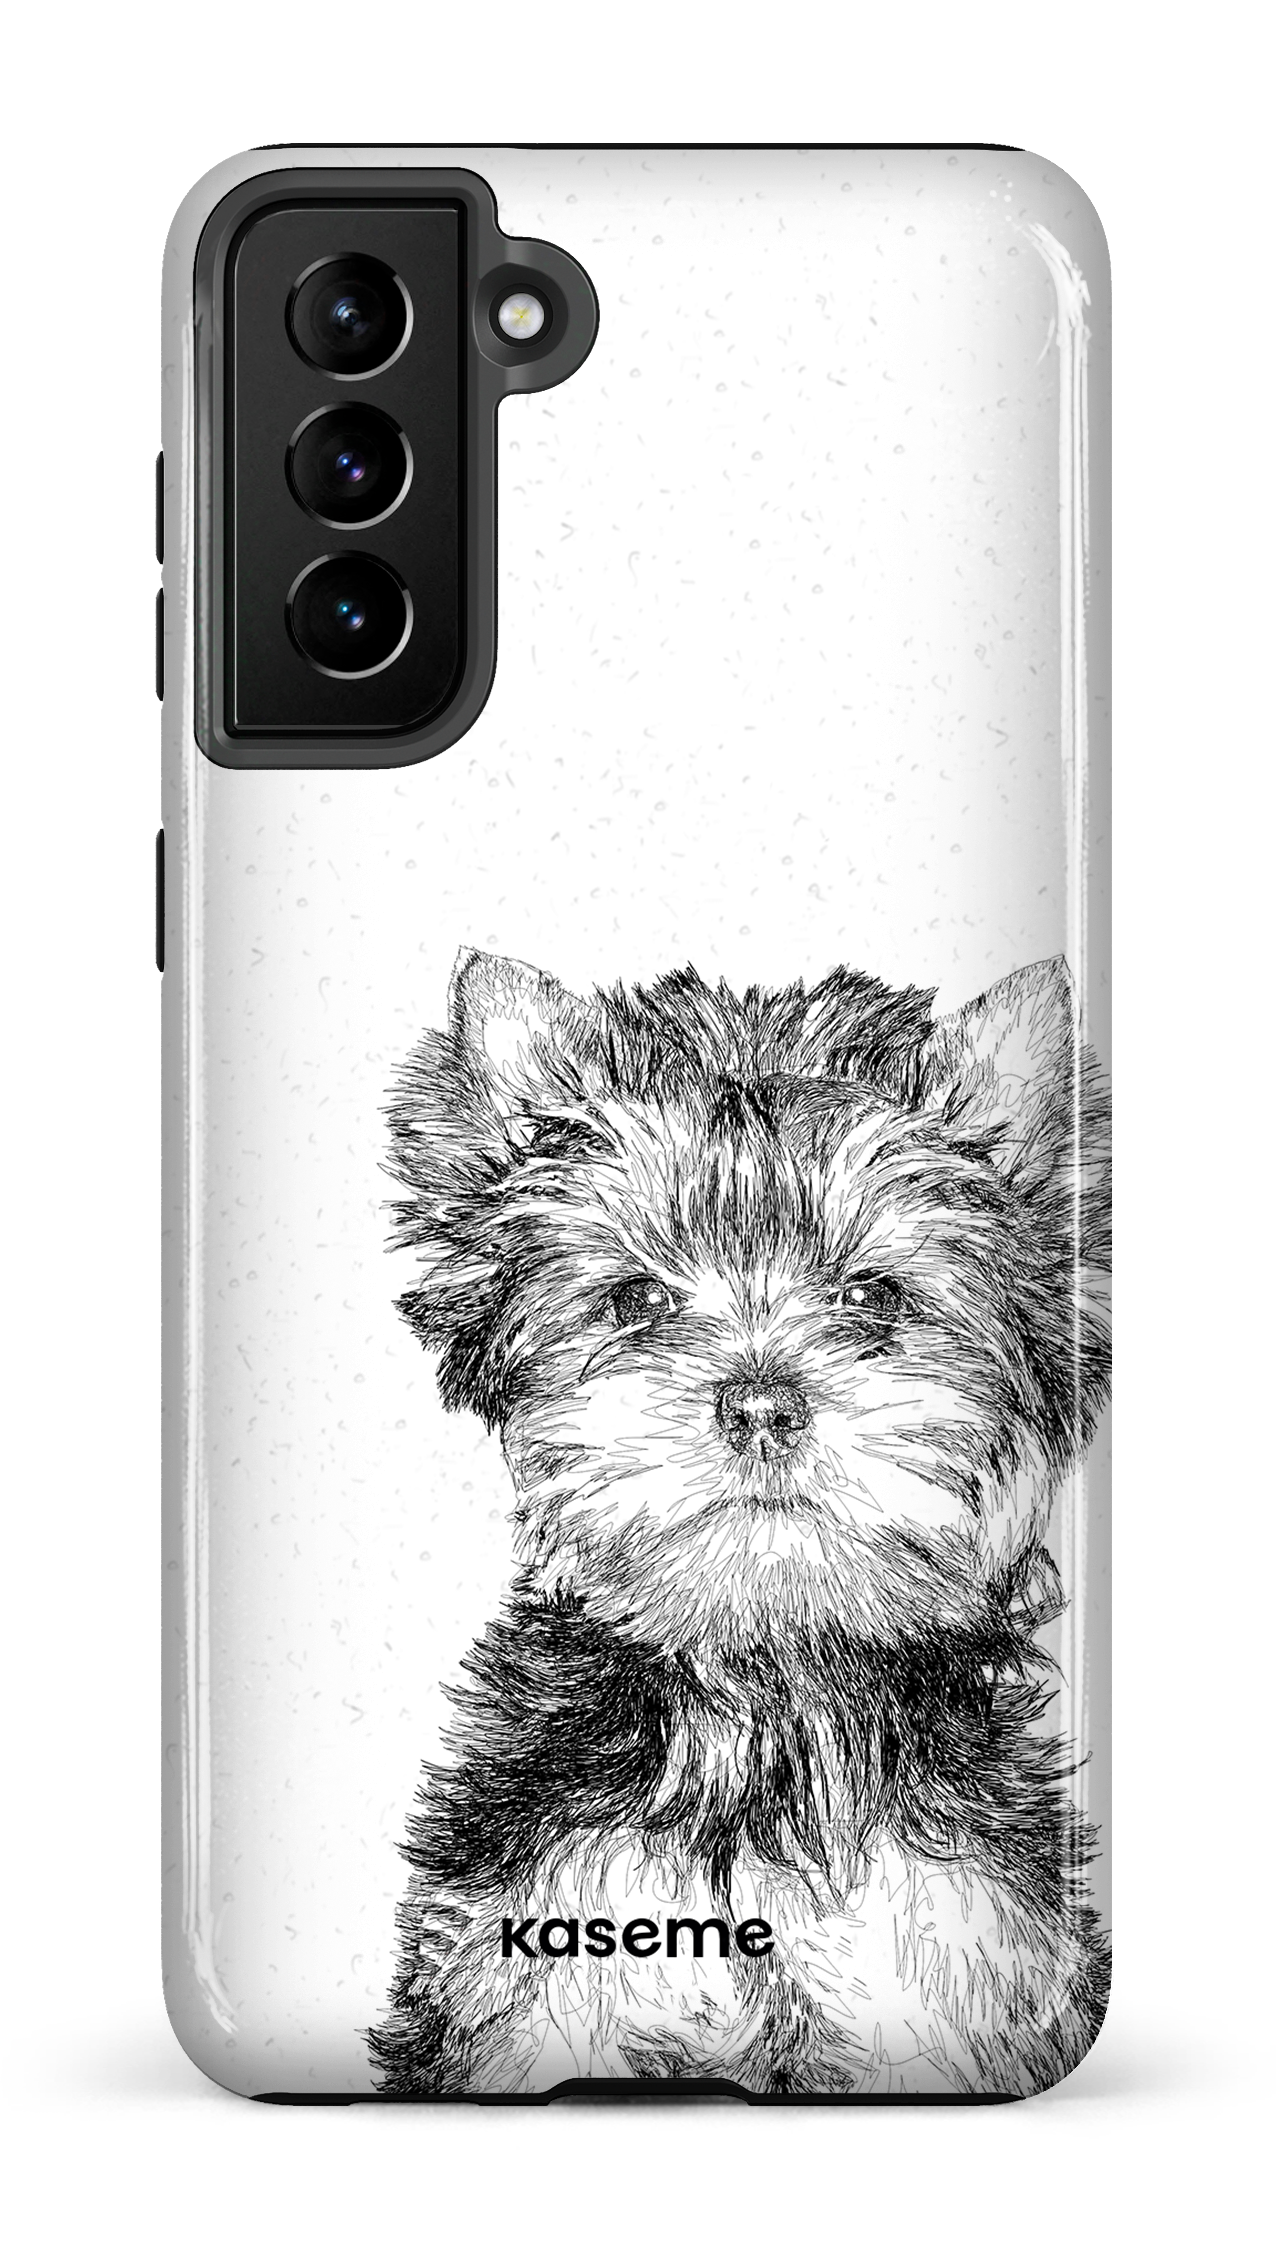 Yorkshire Terrier - Galaxy S21 Plus